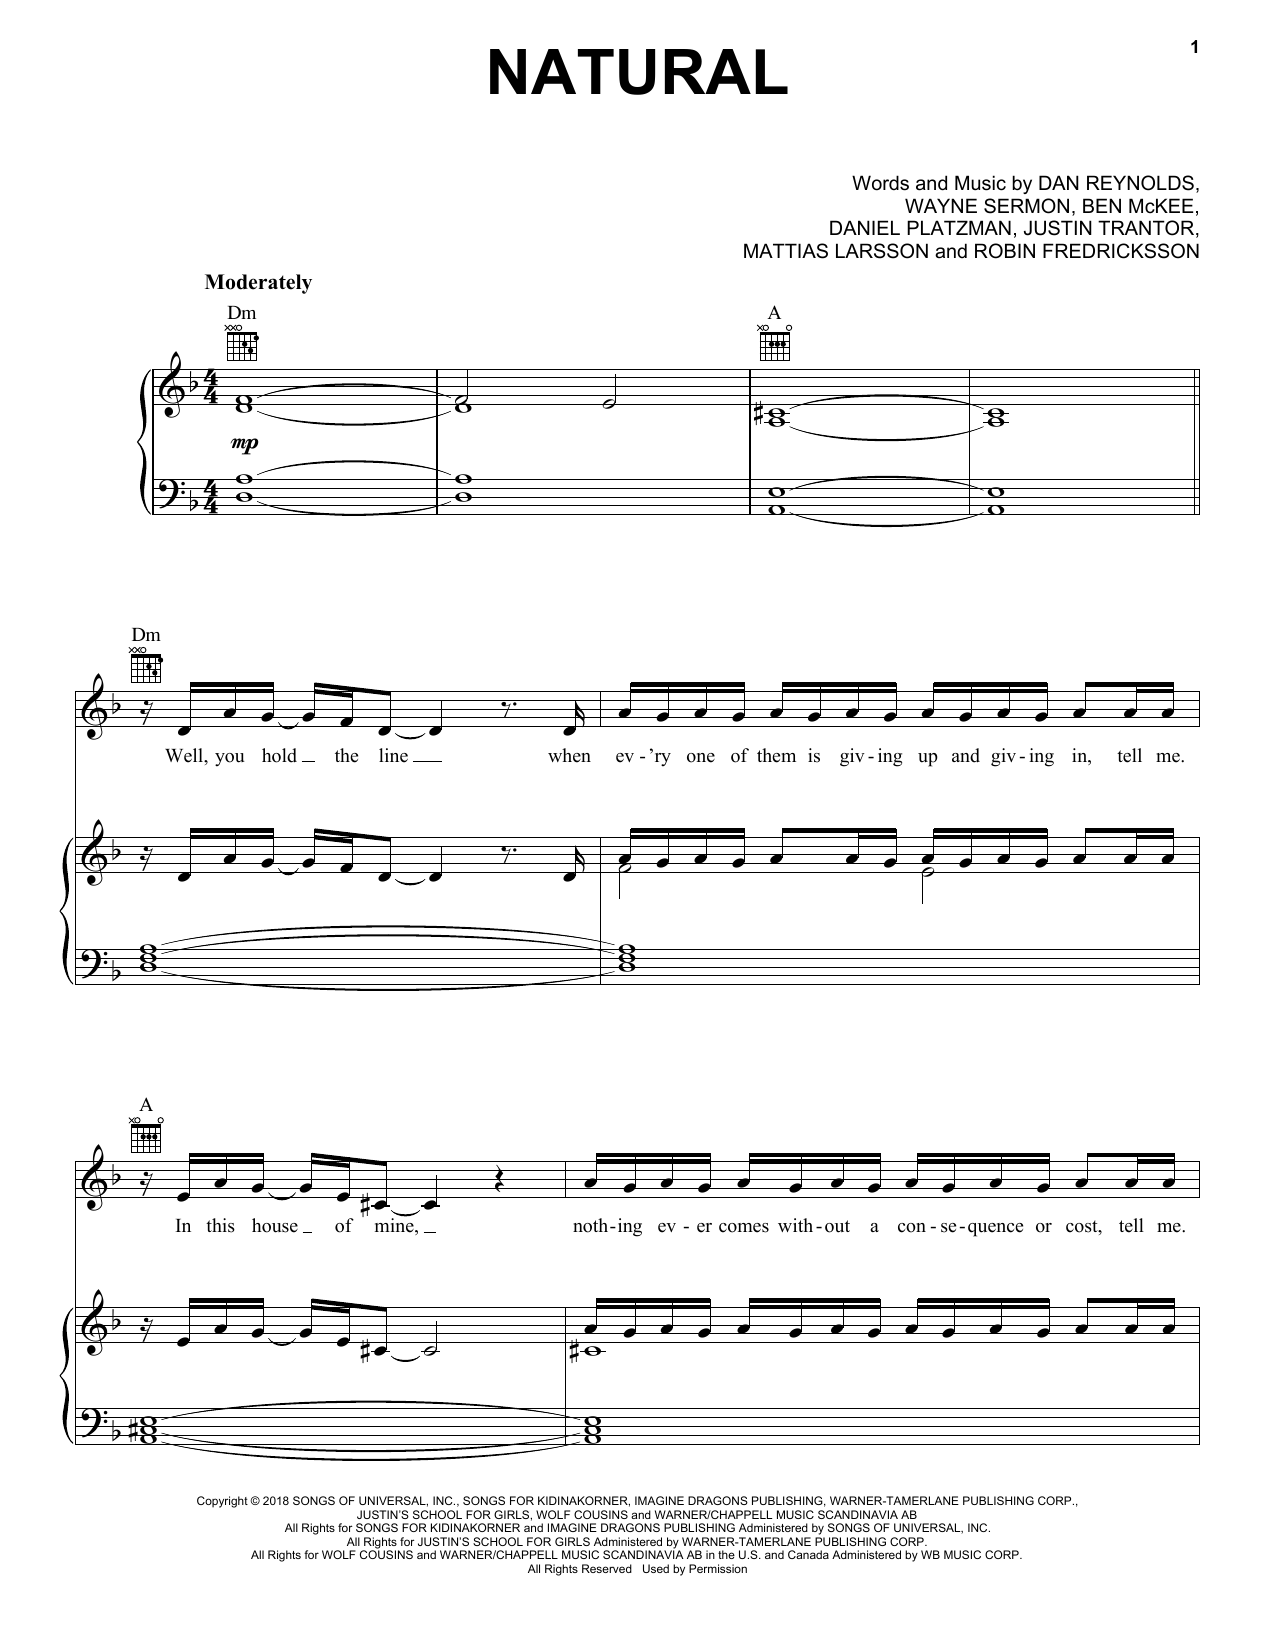 Imagine Dragons Natural sheet music notes and chords. Download Printable PDF.